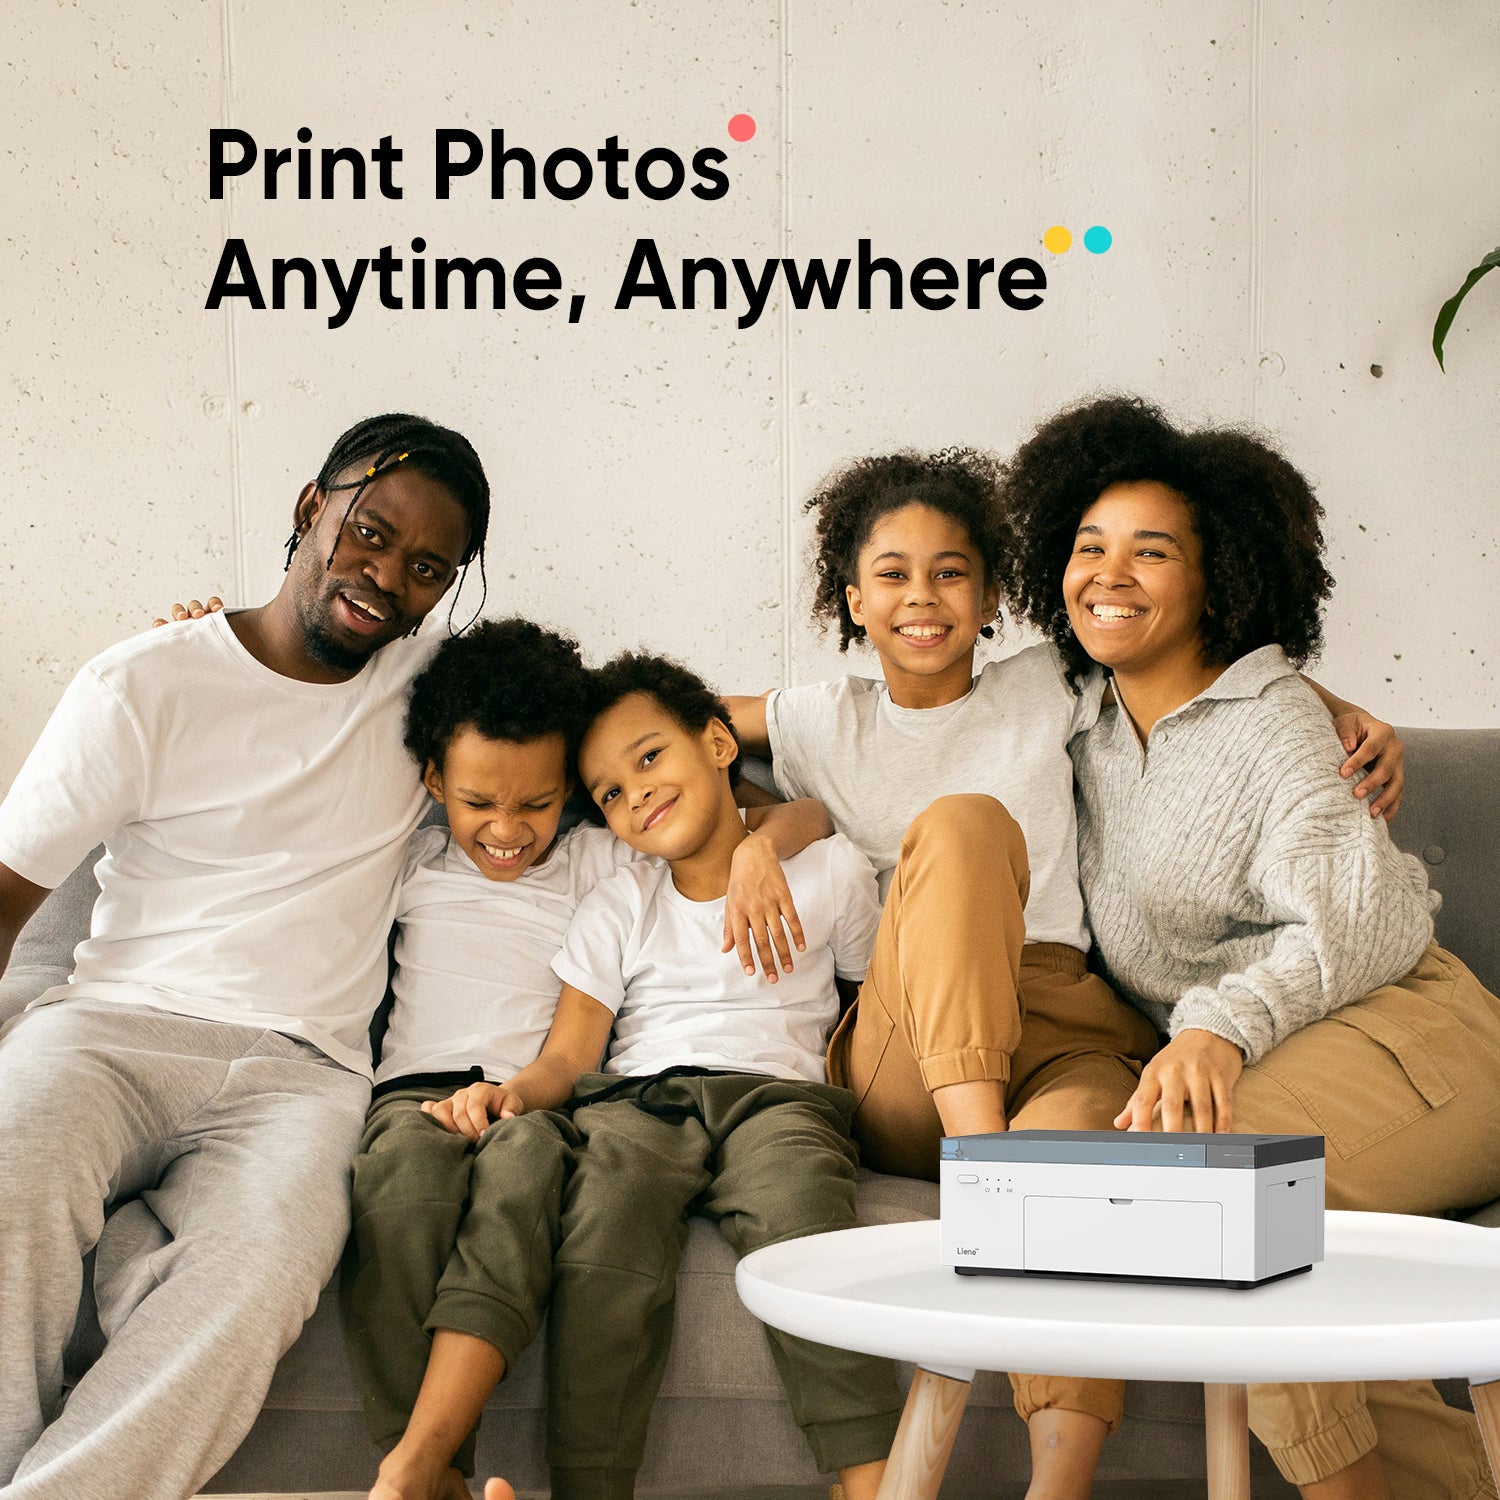 A family print photos at home